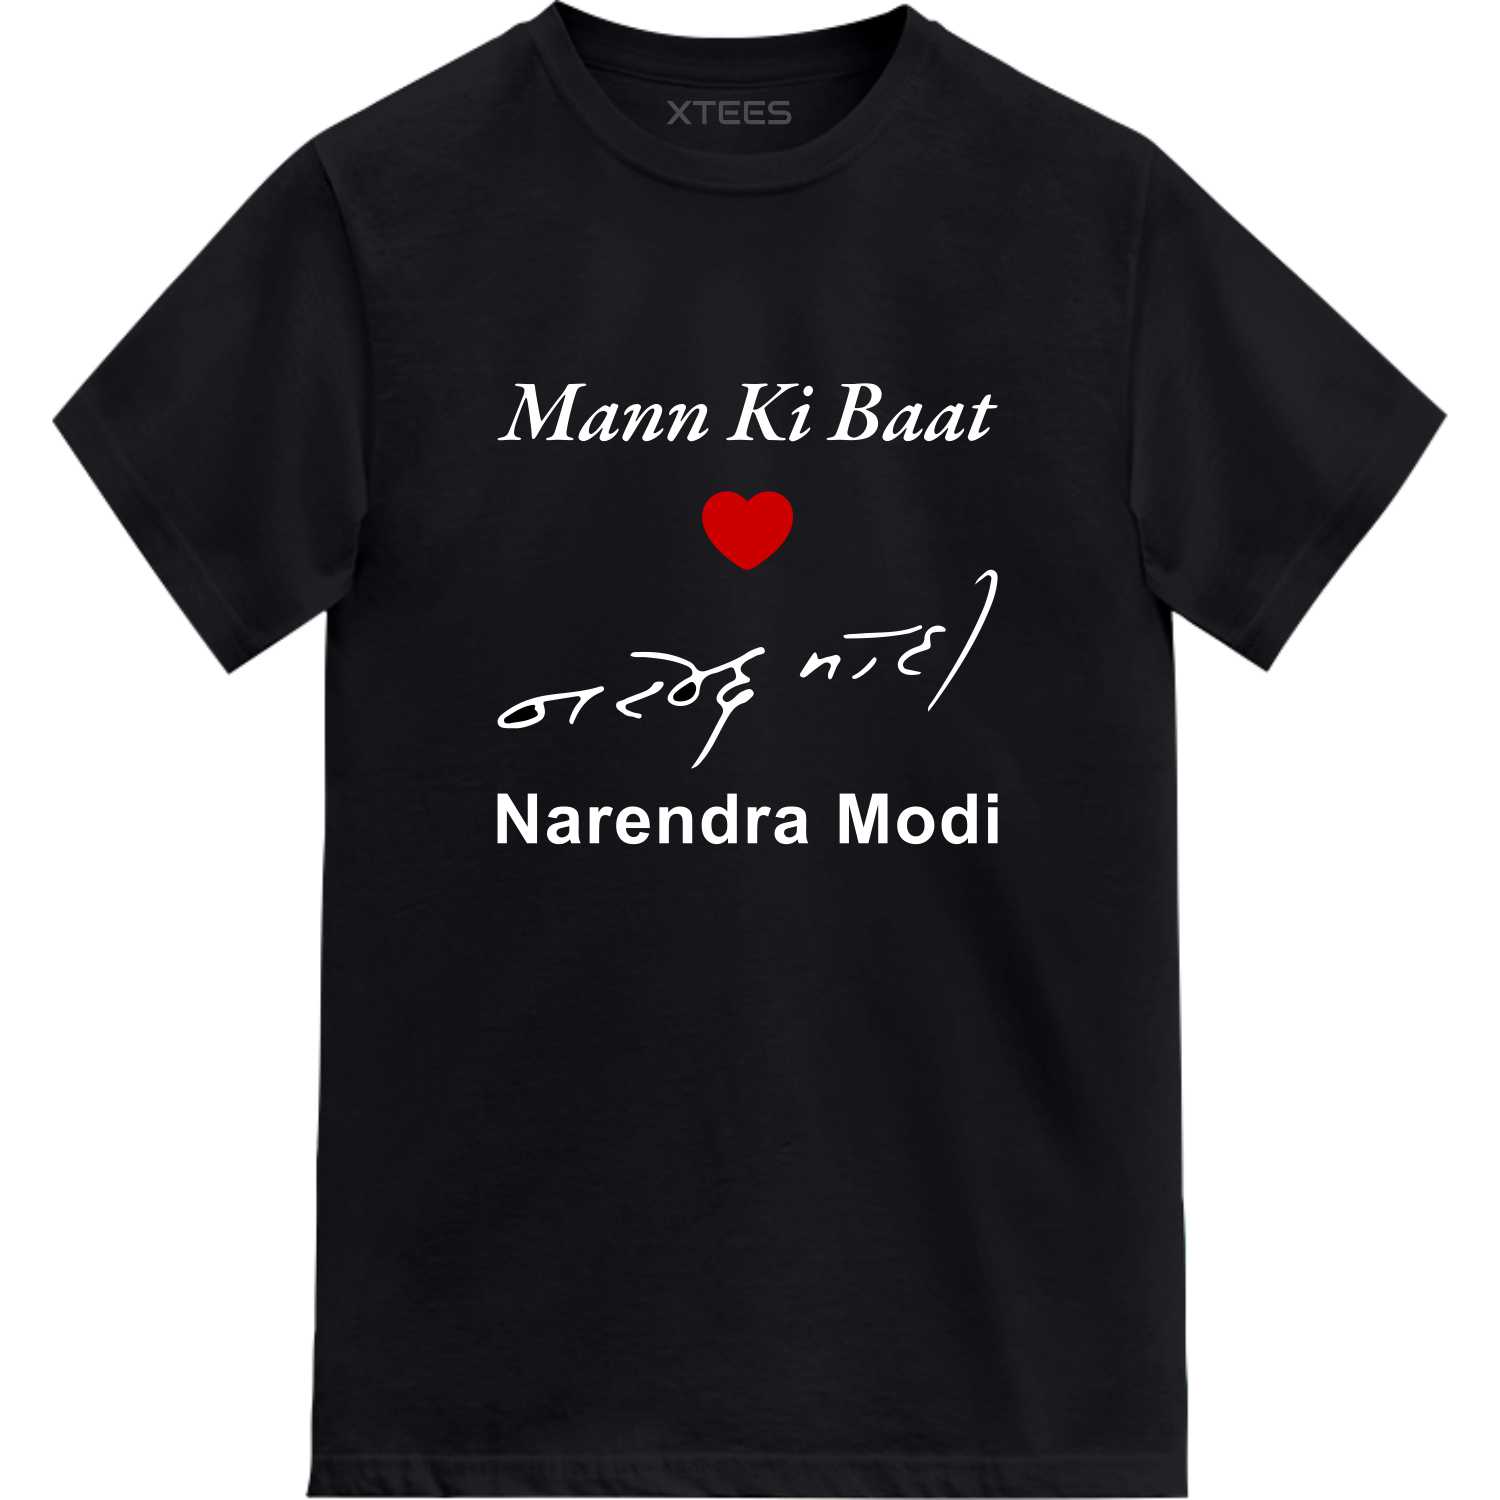 Mann Ki Baat Narendra Modi T Shirt image